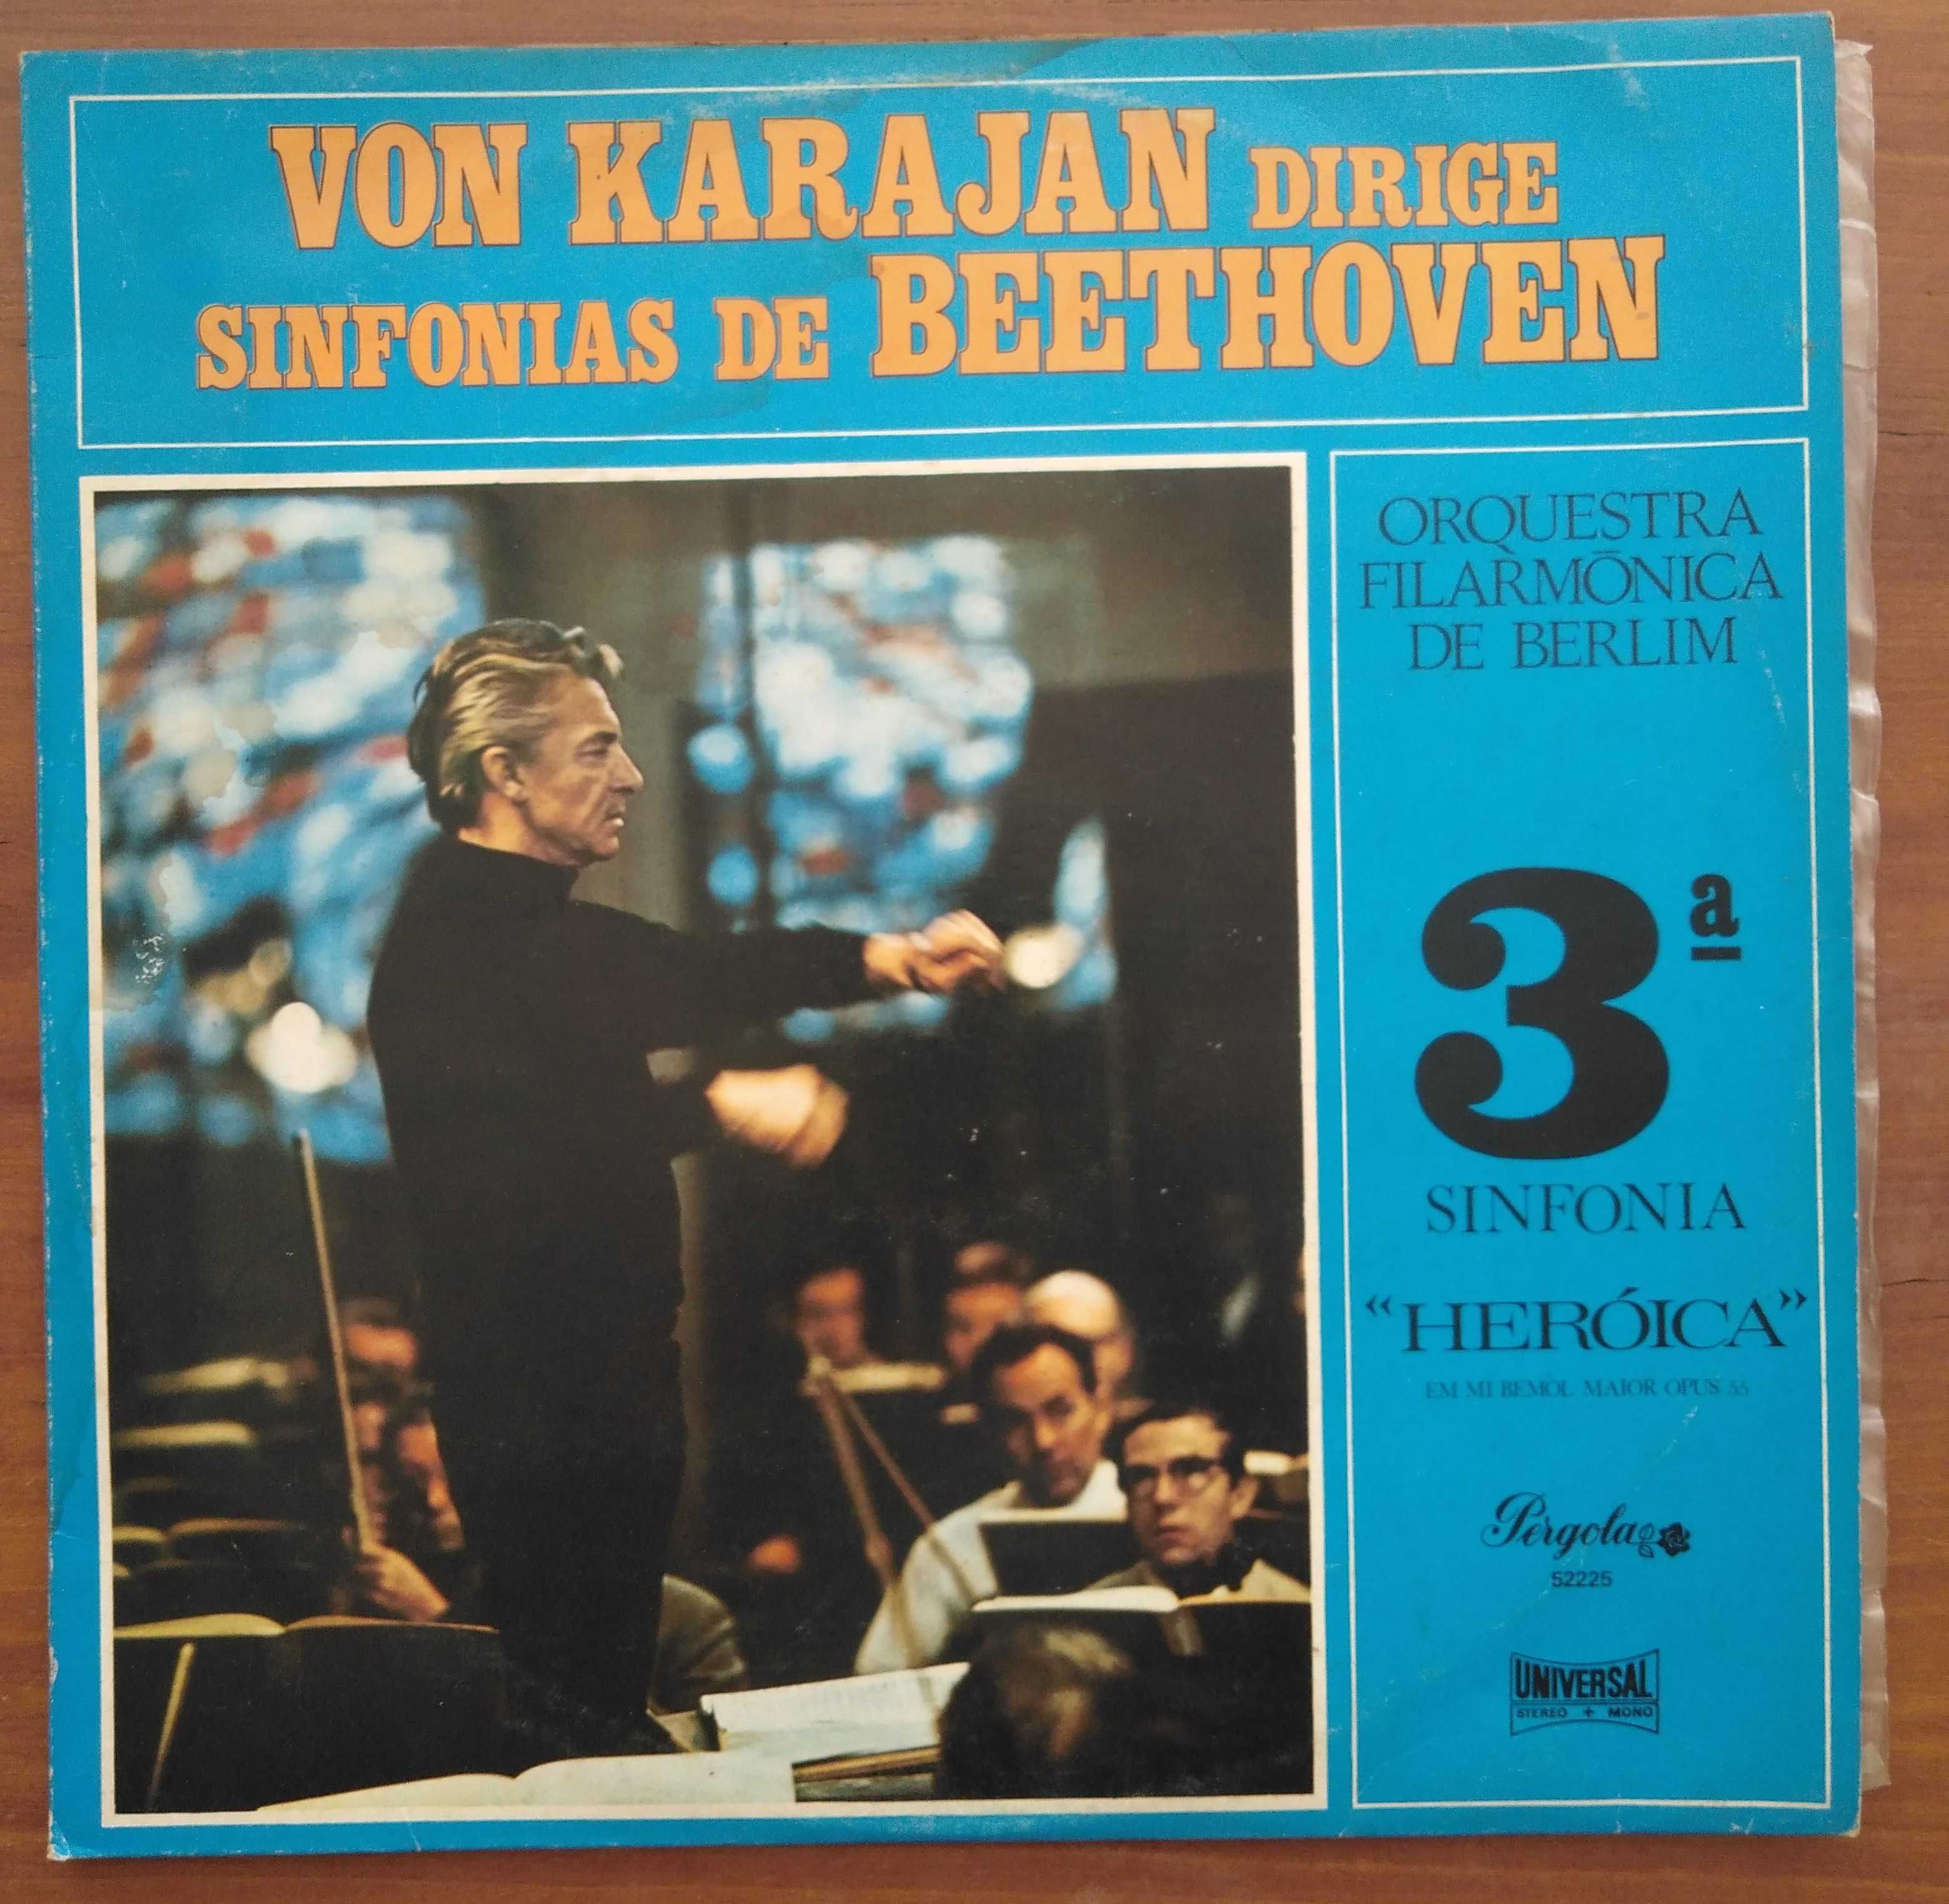 vinil: “Von Karajan dirige sinfonias de Beethoven”